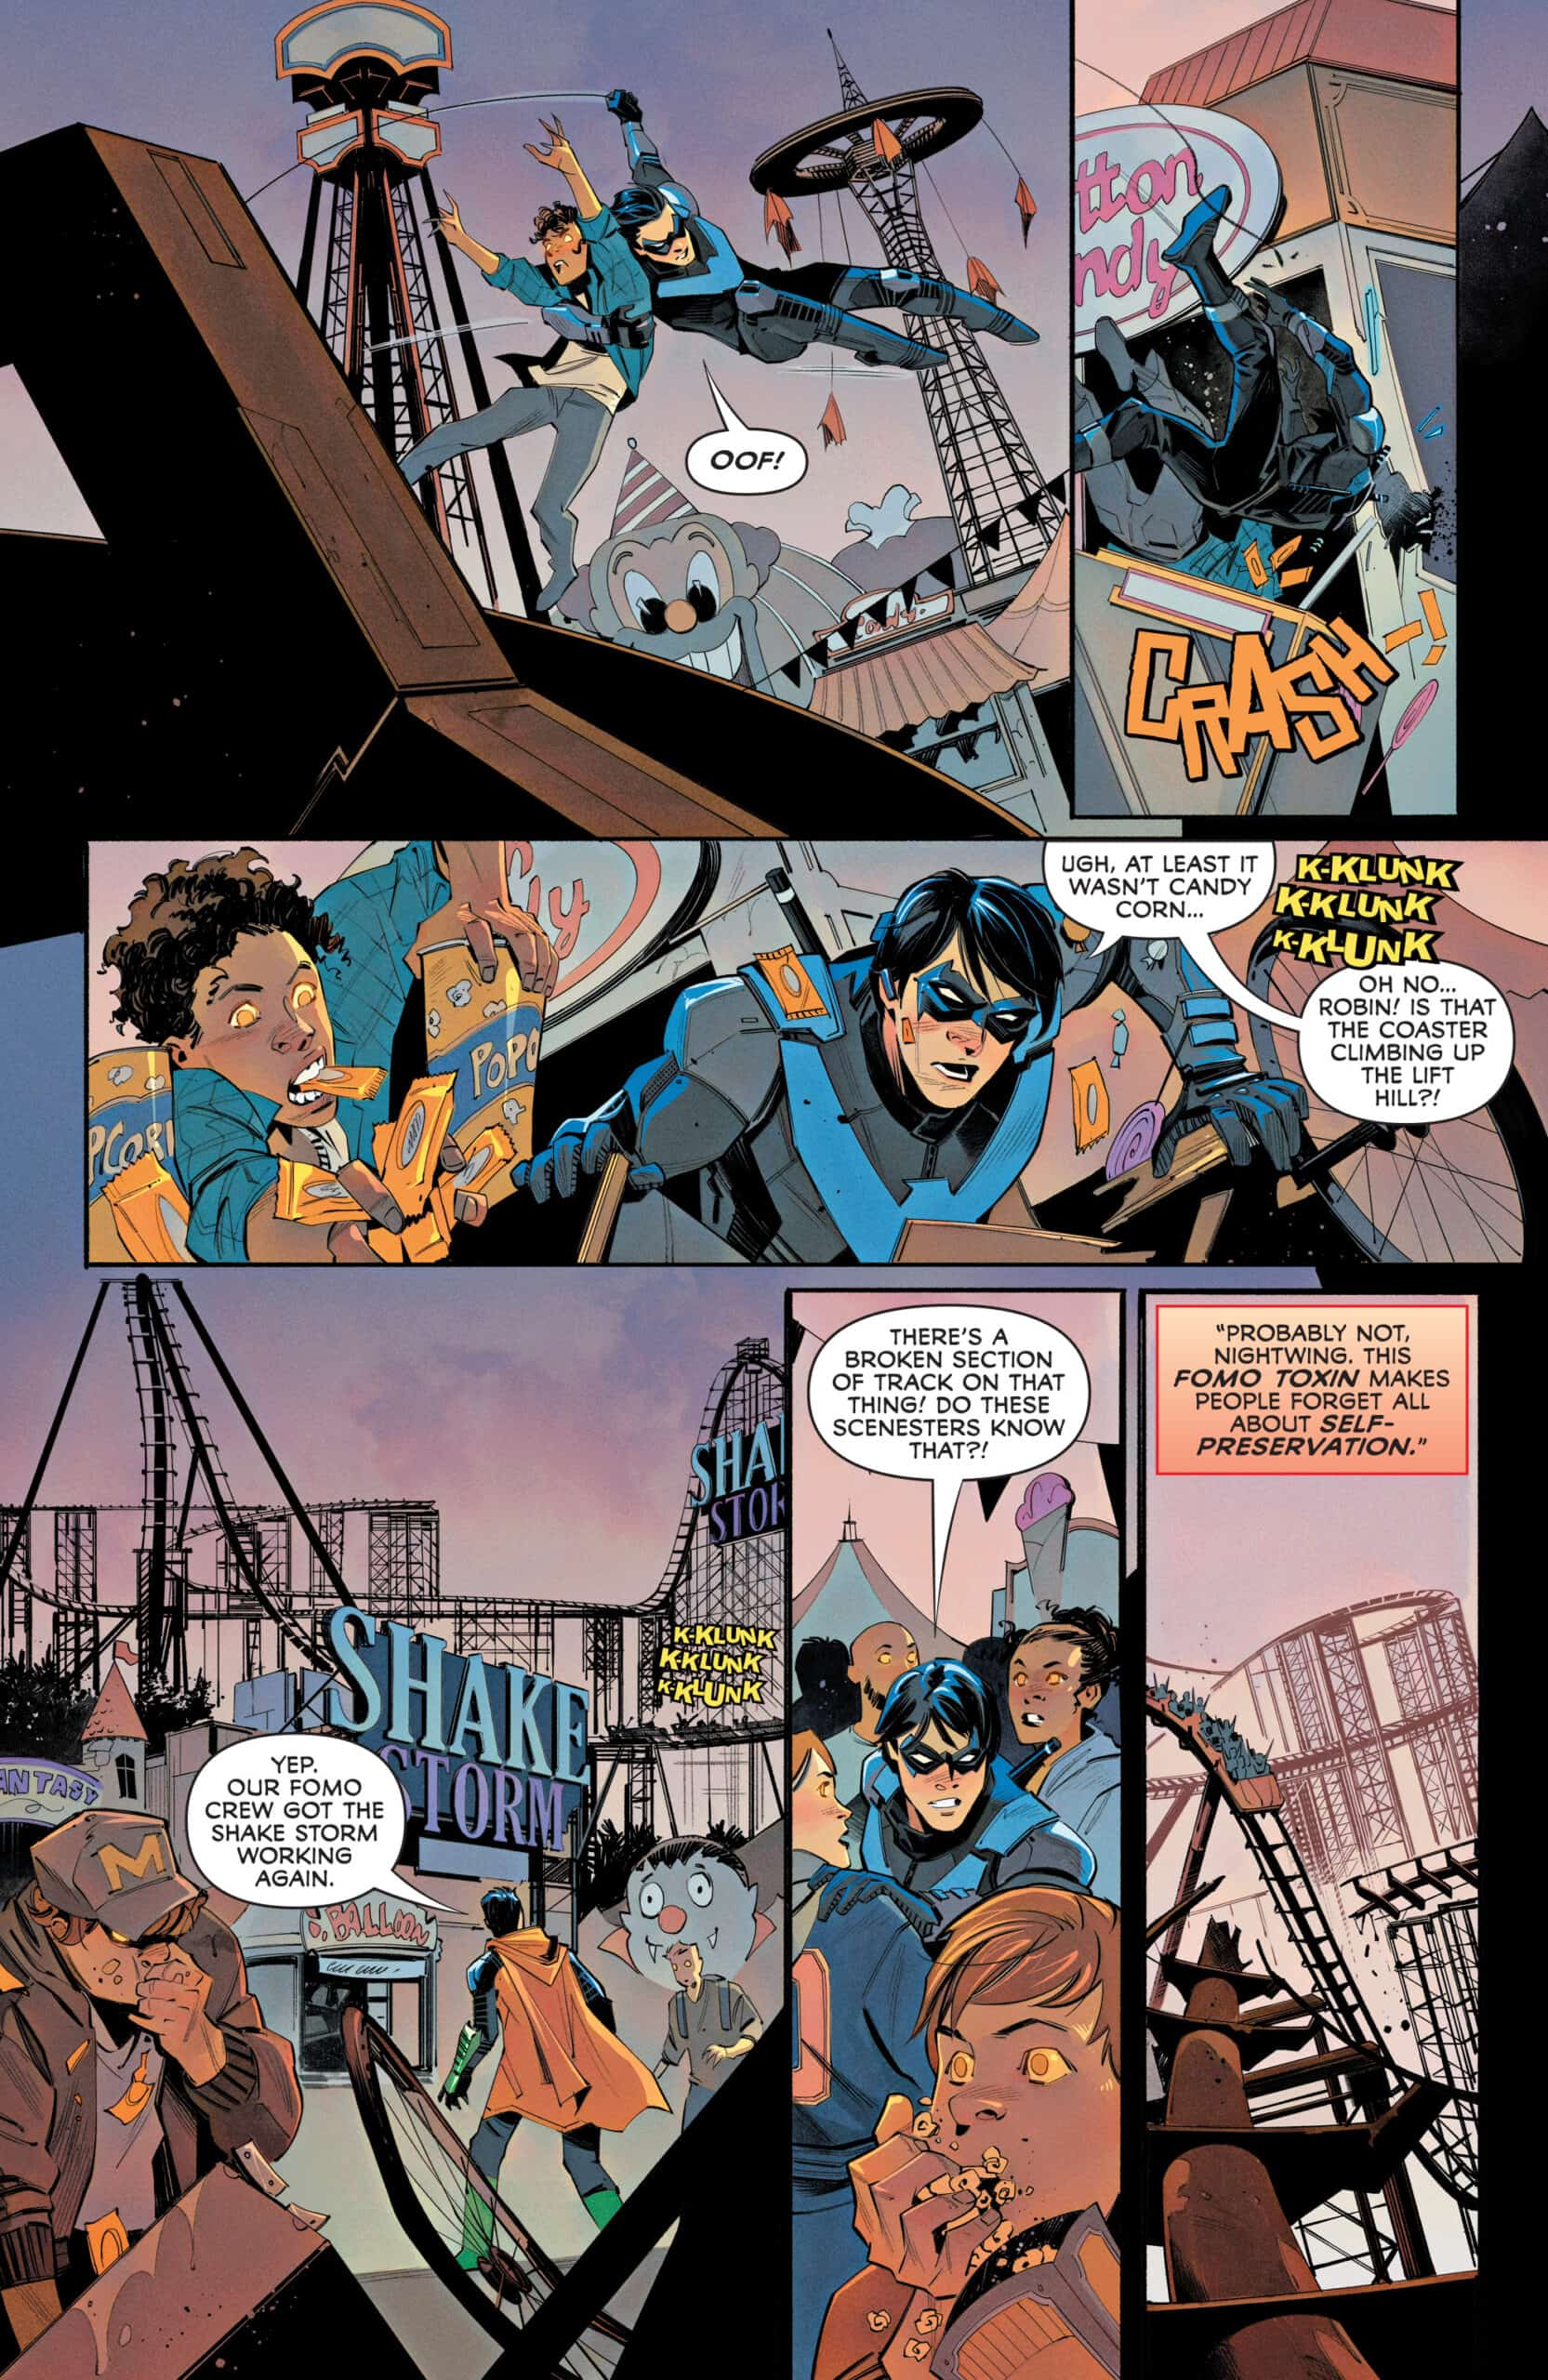 SDCC '22: BATMAN: GOTHAM KNIGHTS gets a prequel comic, GILDED CITY